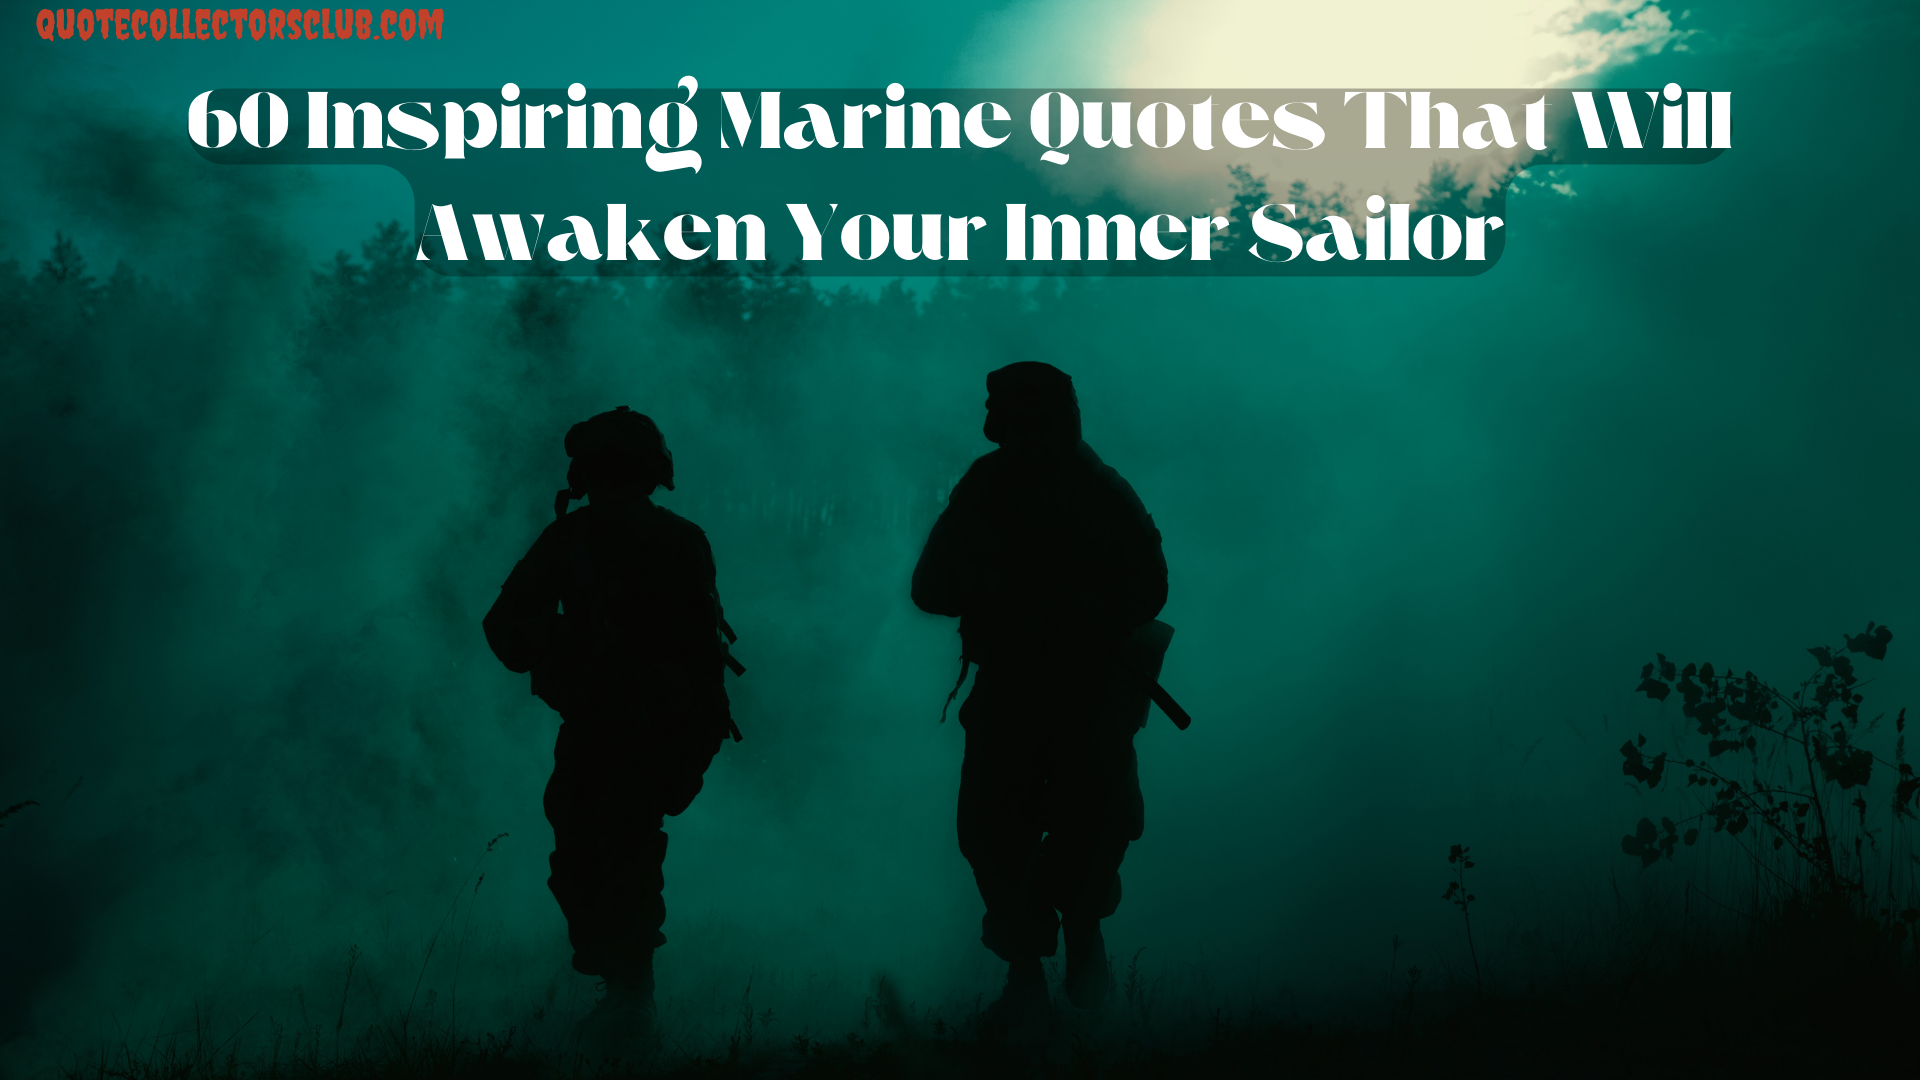 60 Inspiring Marine Quotes That Will Awaken Your Inner Sailor